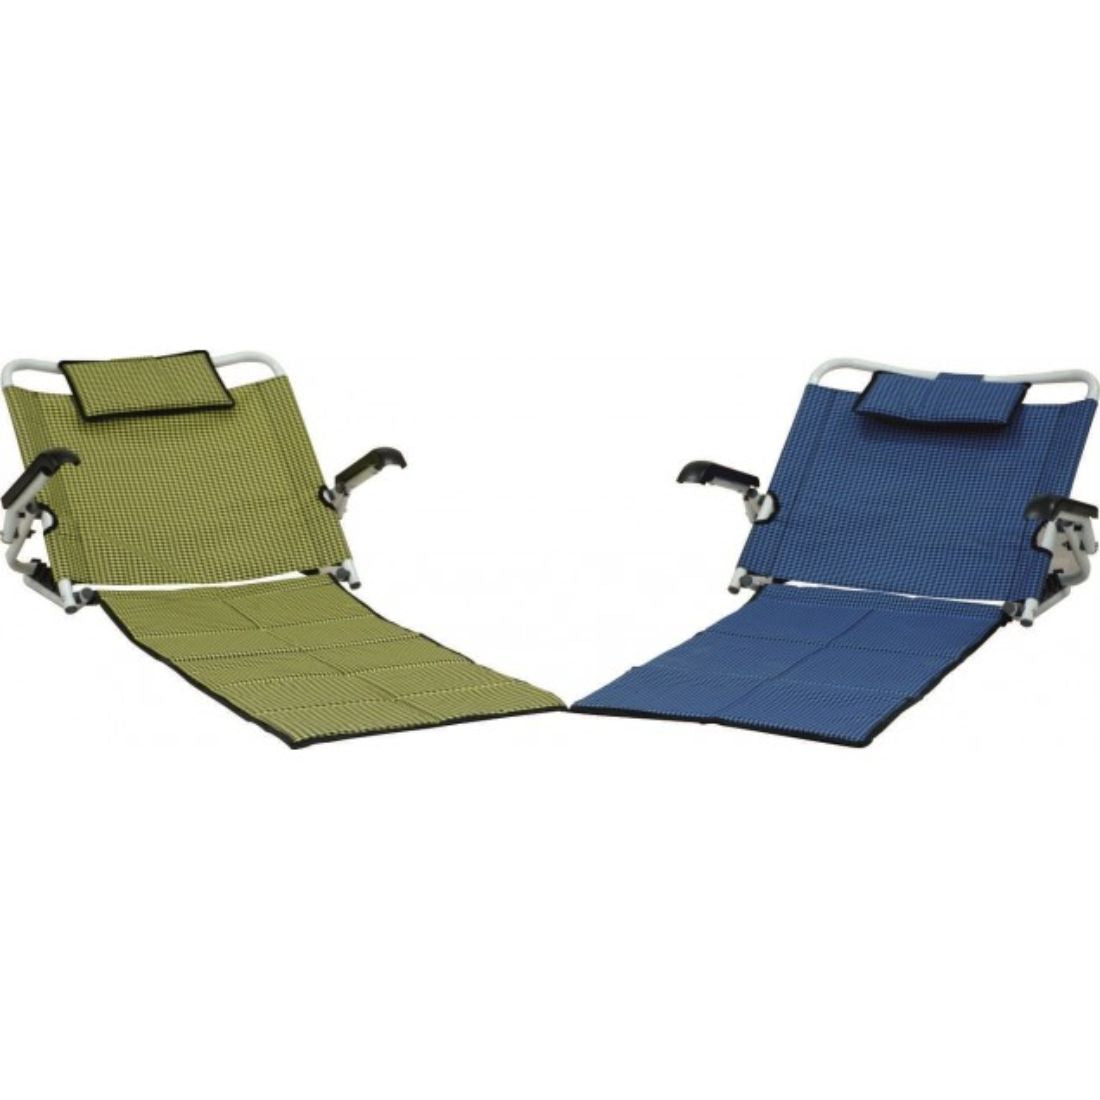 Backrest with Armrest for Bed - Adjustable Bed Backrest at Best Price in  Chennai